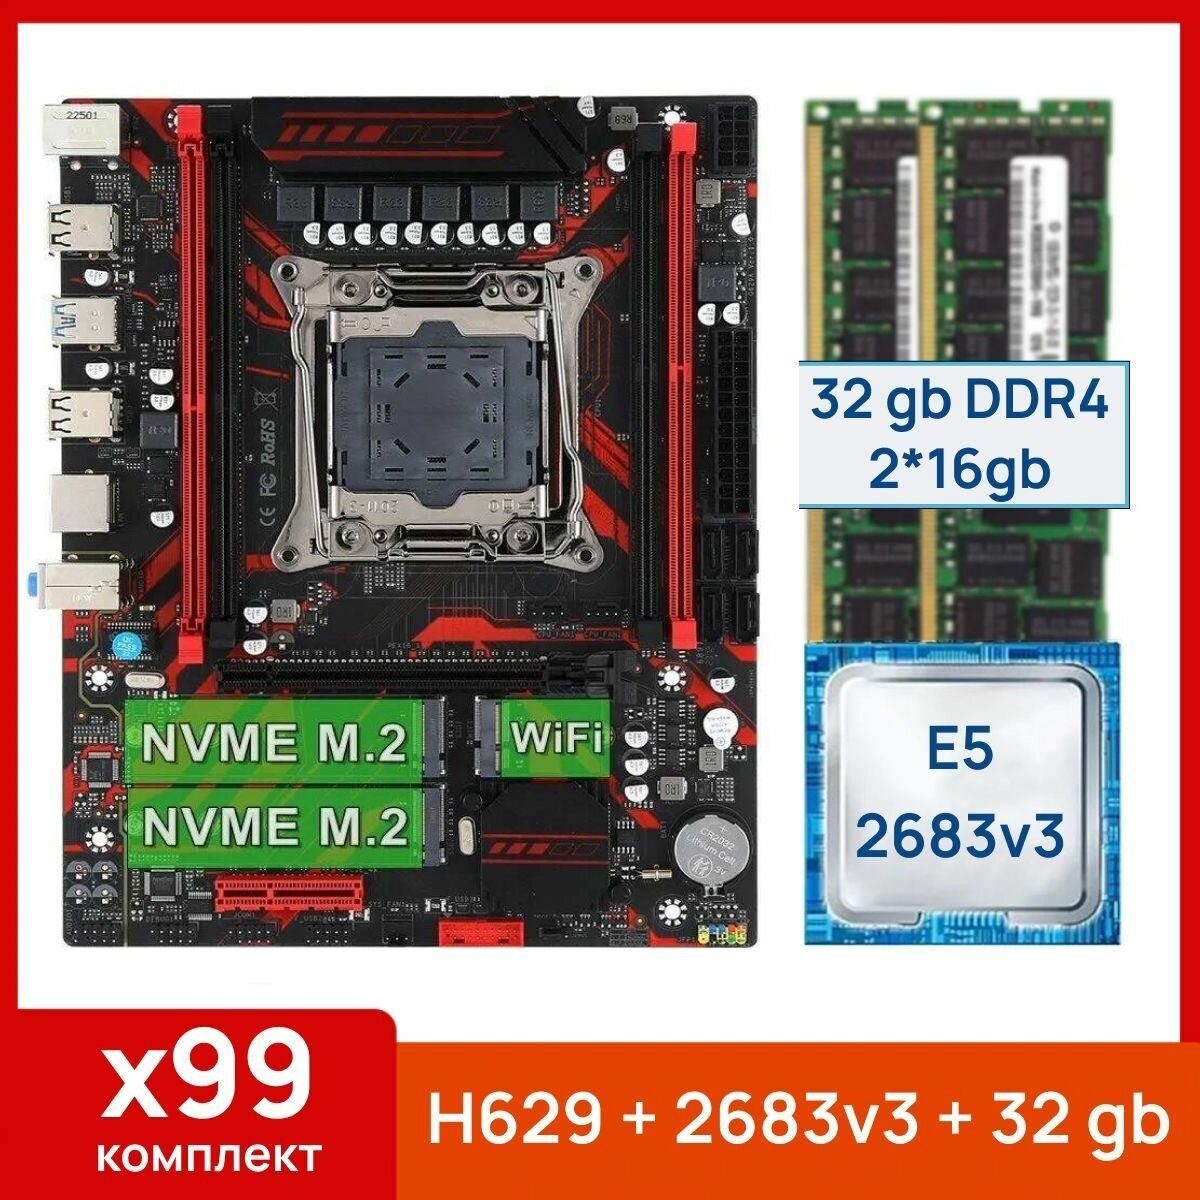 Комплект: Atermiter X99 H629 + Xeon E5 2683v3 + 32 gb(2x16gb) DDR4 ecc reg